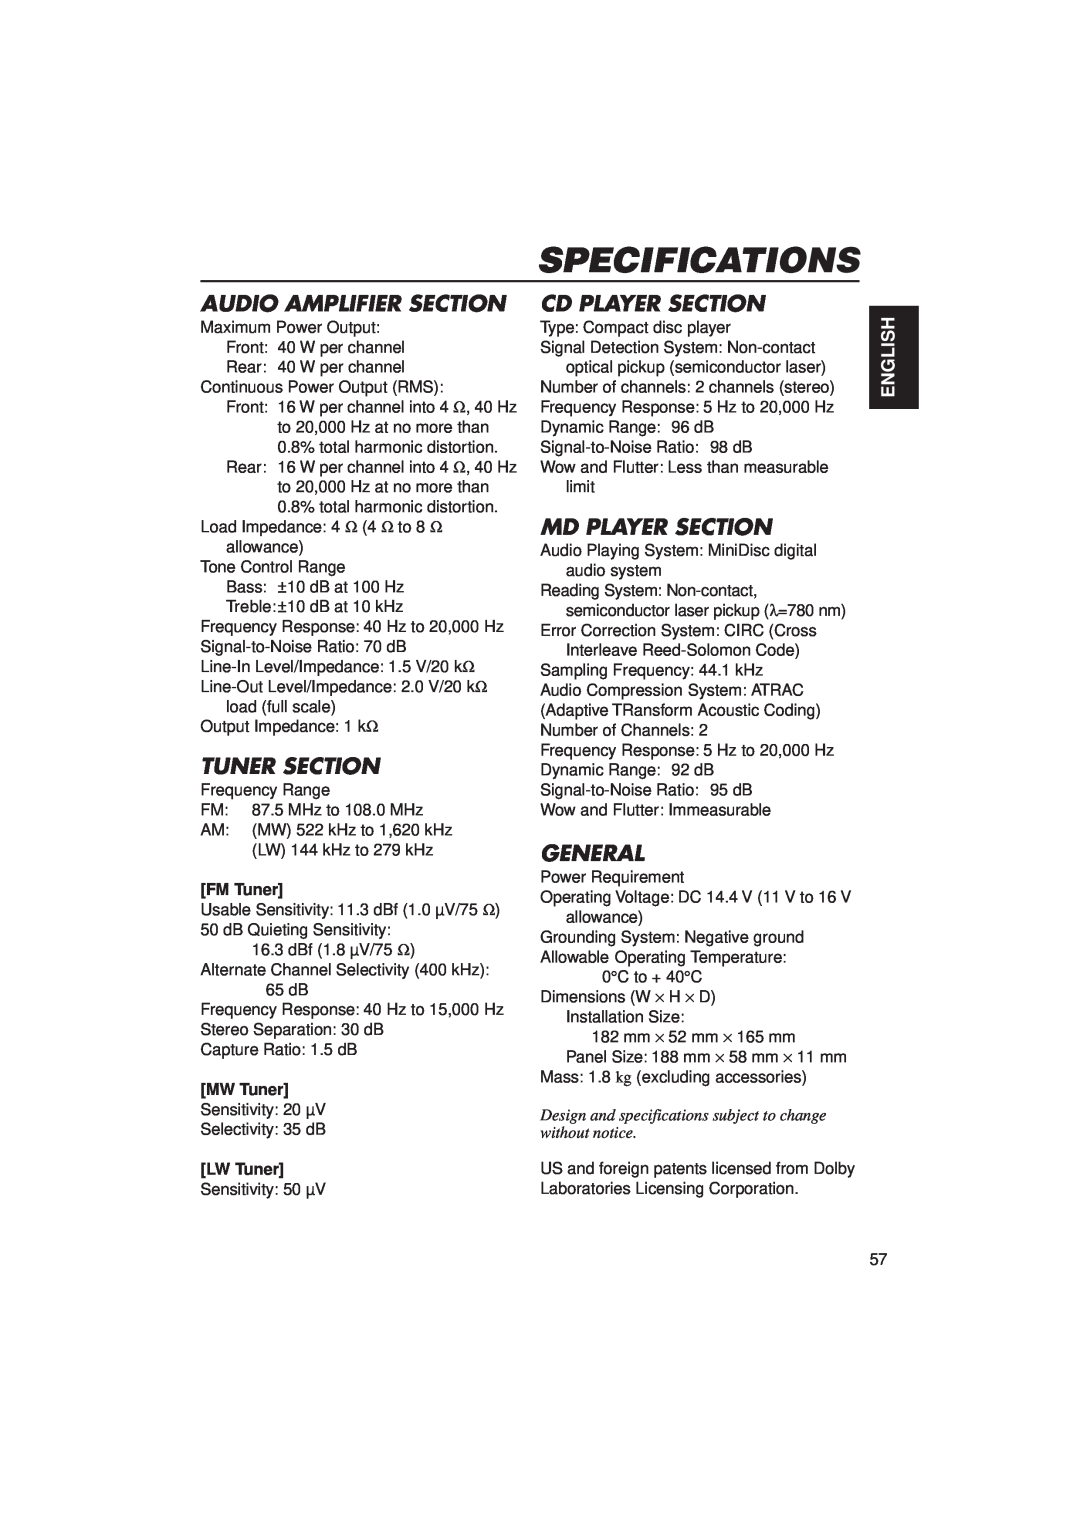 JVC KD-MX2900R manual Specifications, English, FM Tuner, MW Tuner, LW Tuner 